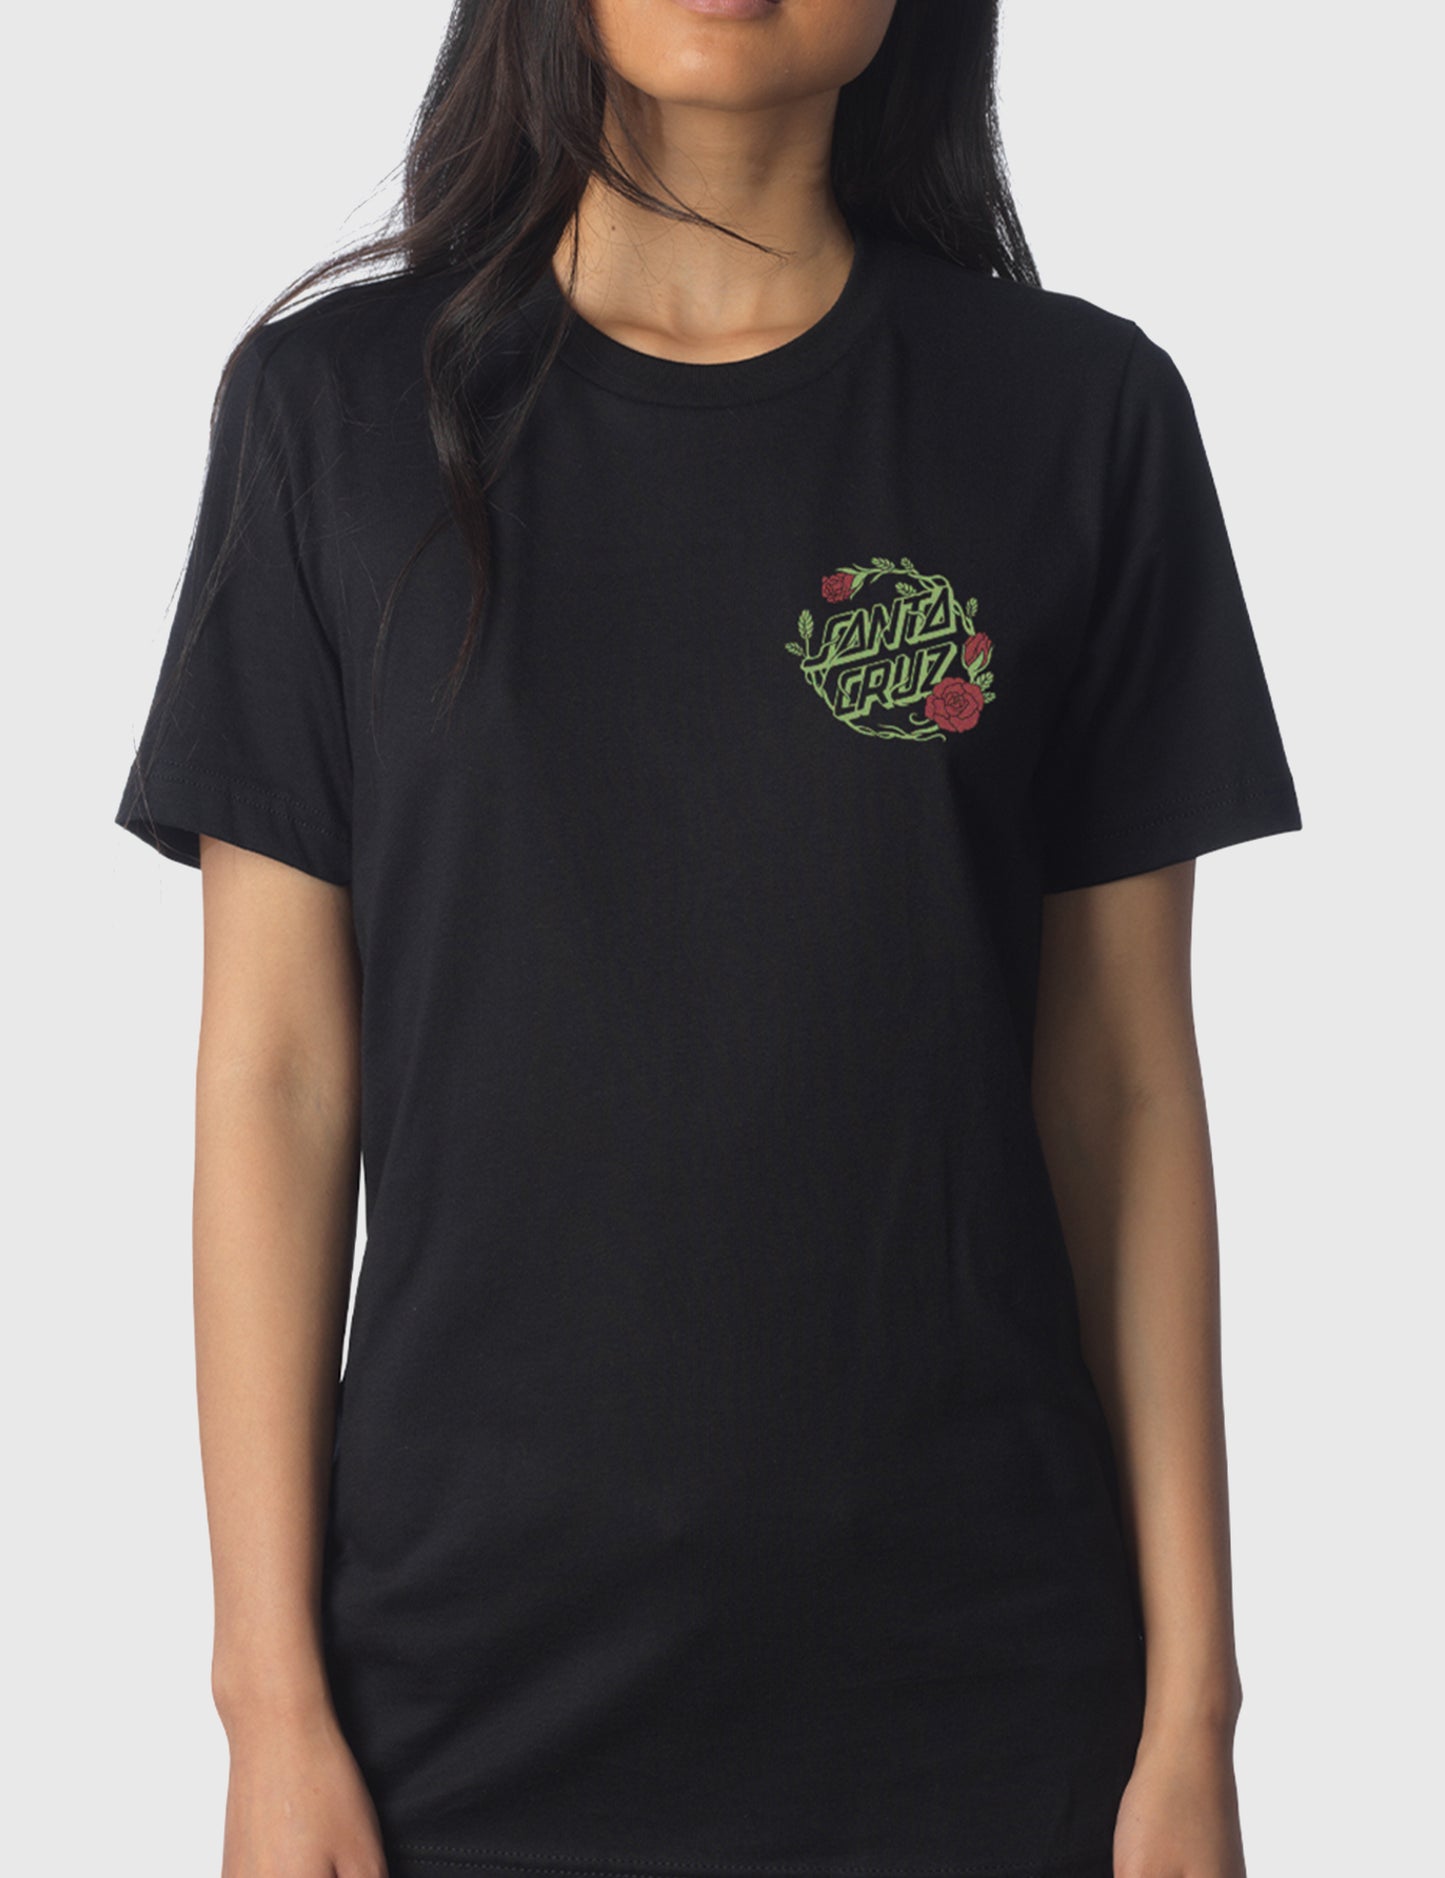 Pokémon Grass Type 1 Fitted T-Shirt (Womens)